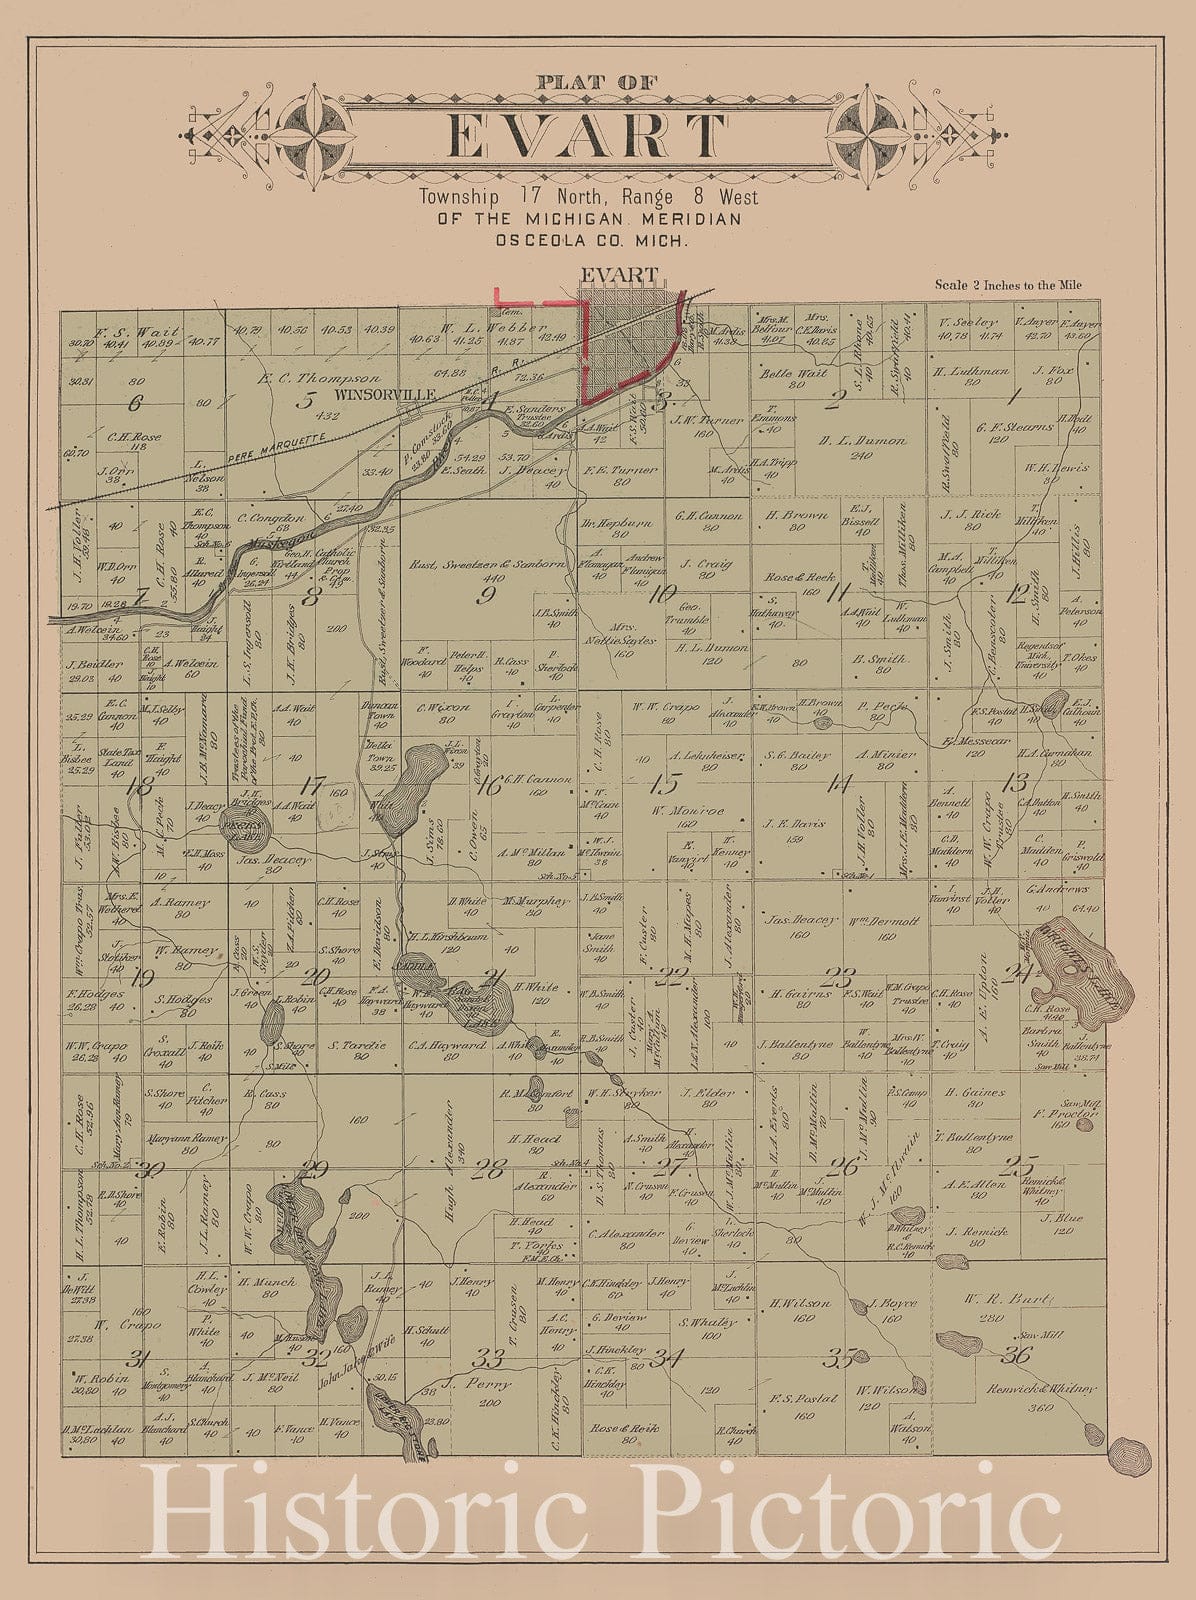 Historic 1900 Map - Plat Book of Osceola County, Michigan - Evart